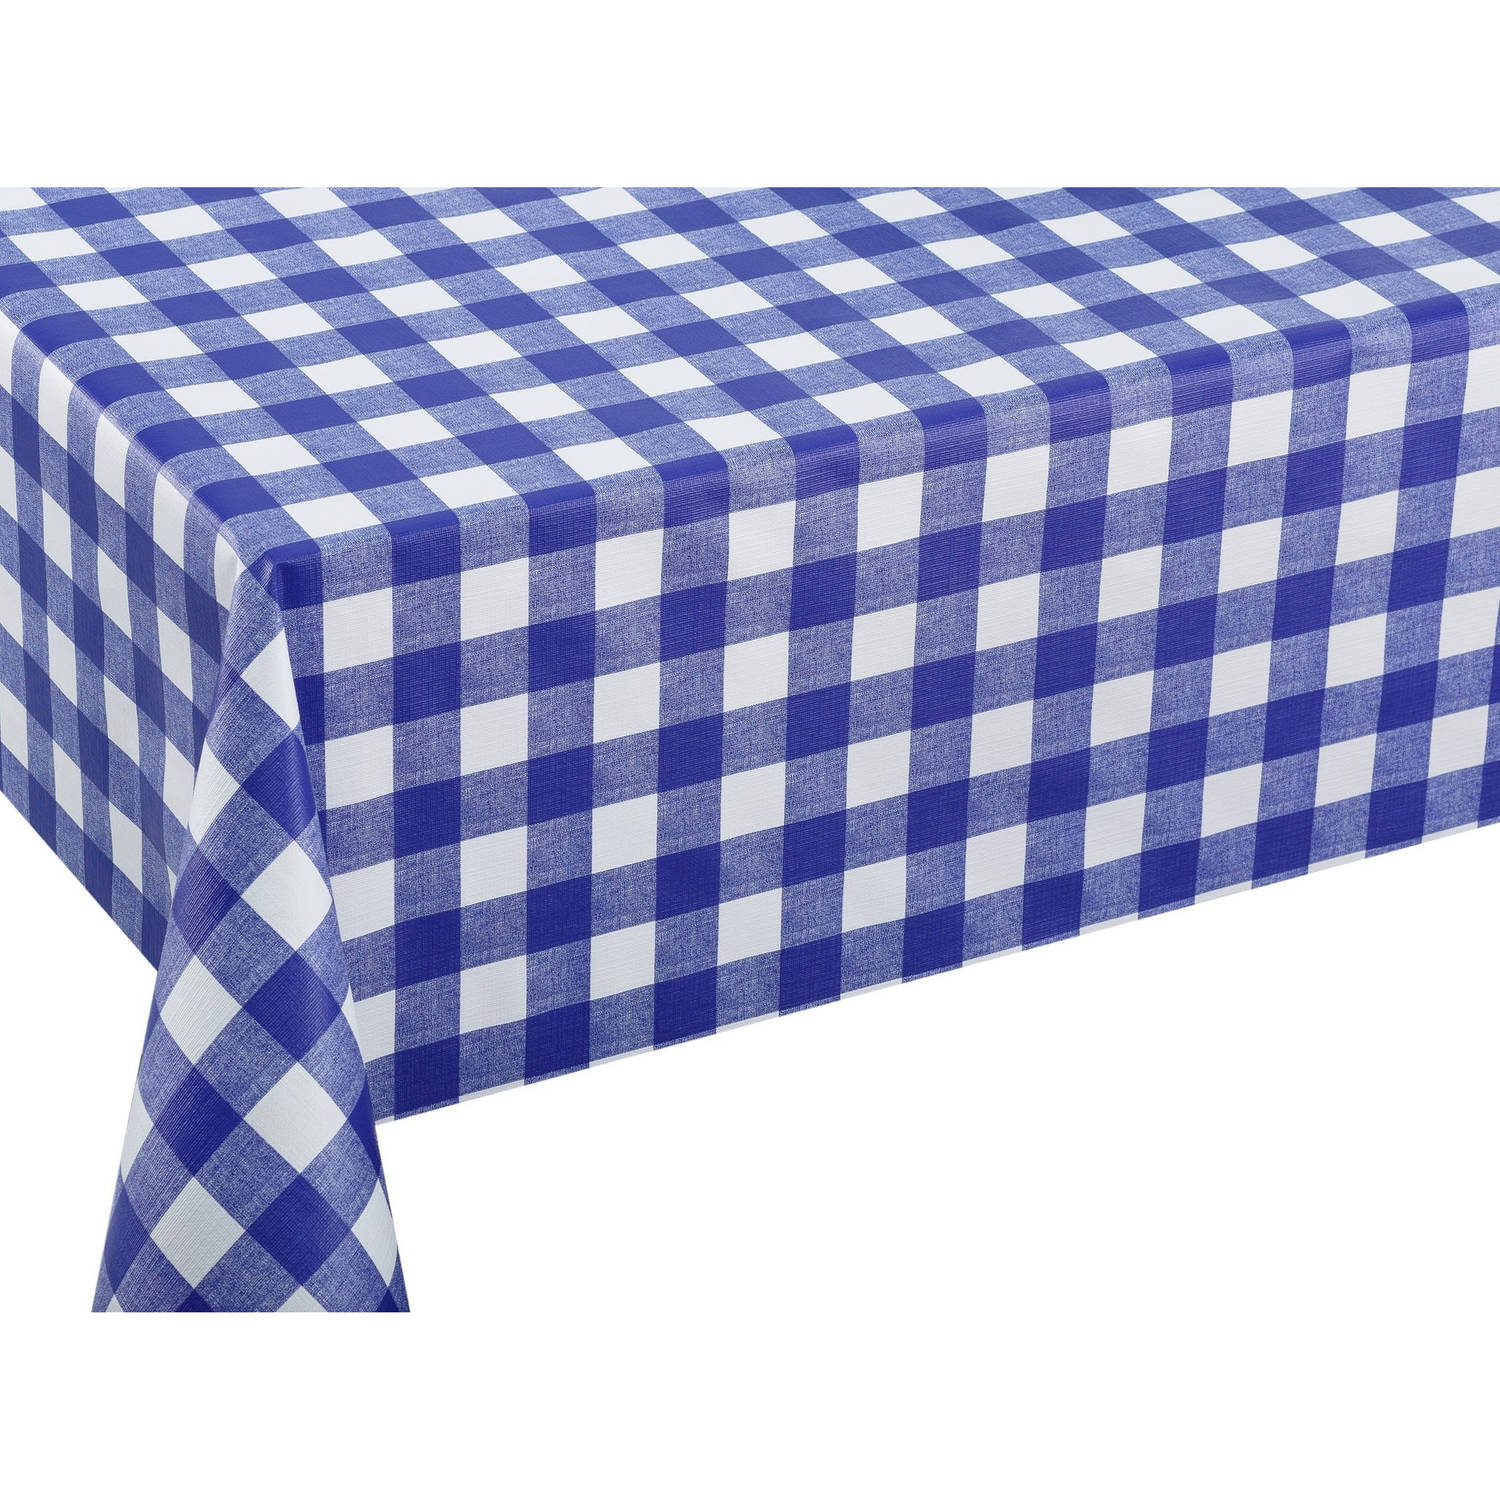 Tafelzeil/tafelkleed blauwe ruit/boerenruit 140 x 220 cm - Tafelzeilen